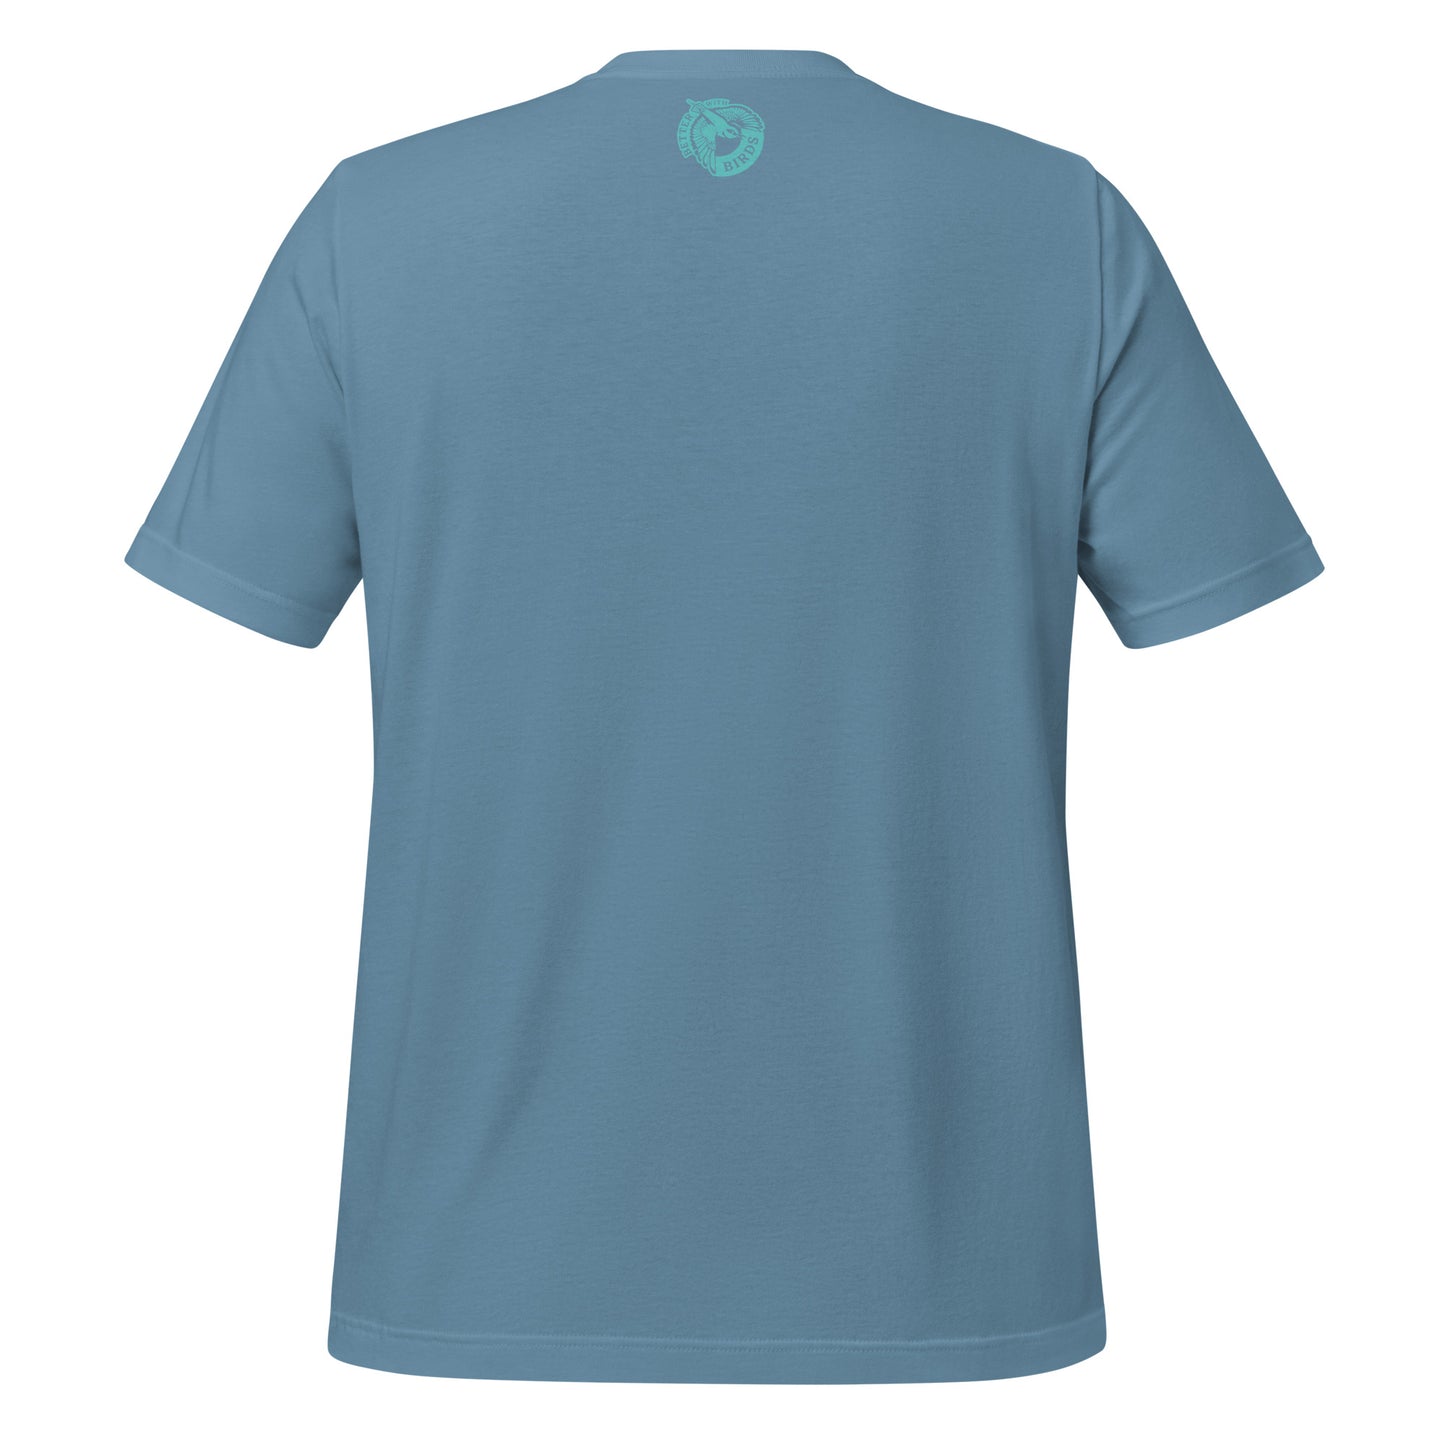 Osprey Lightweight Cotton Unisex T-Shirt